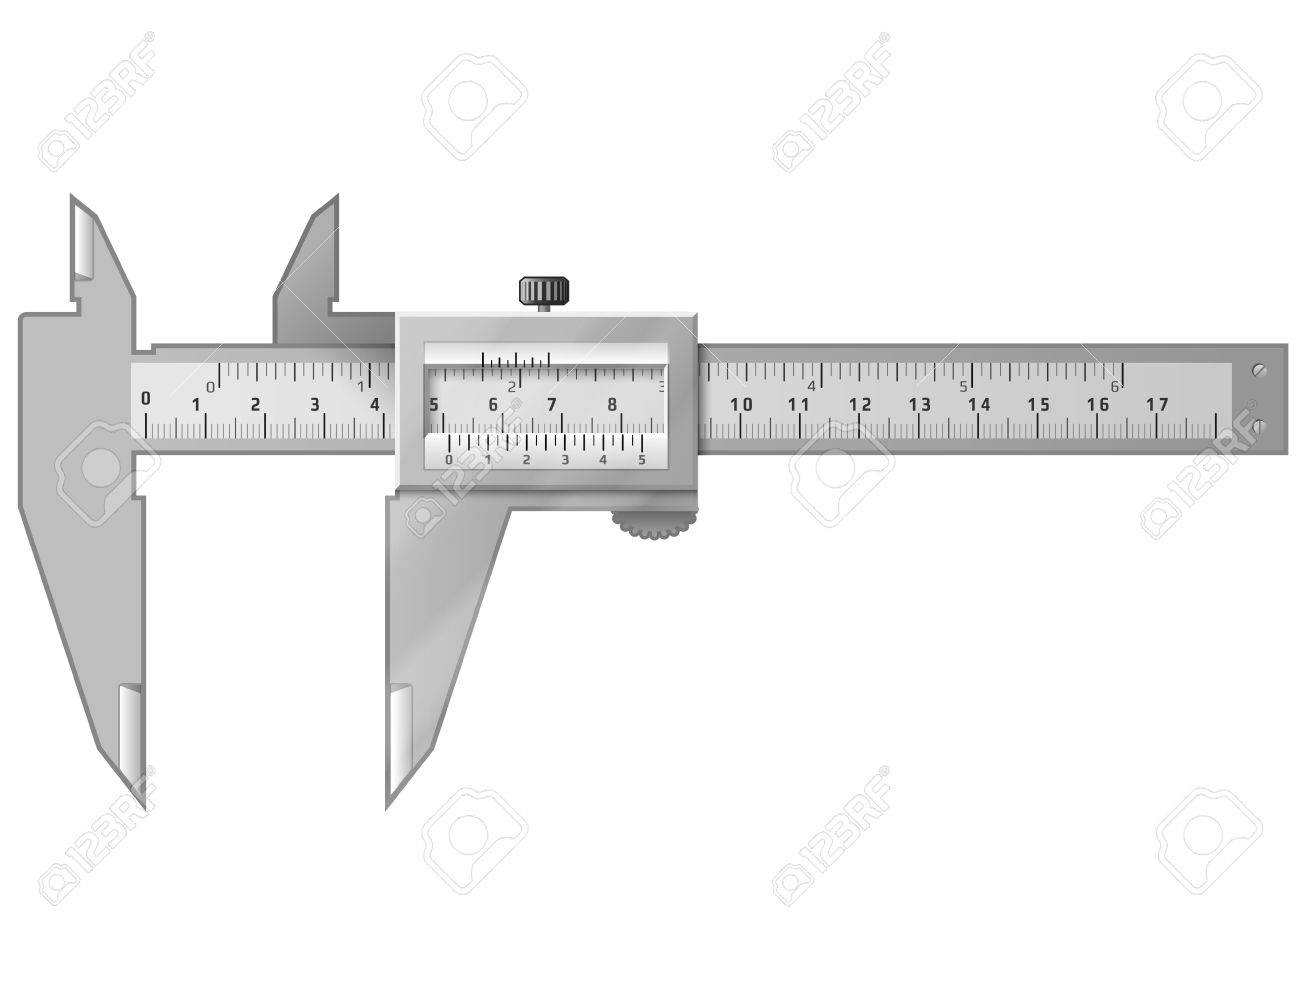 herramientas para medir 1